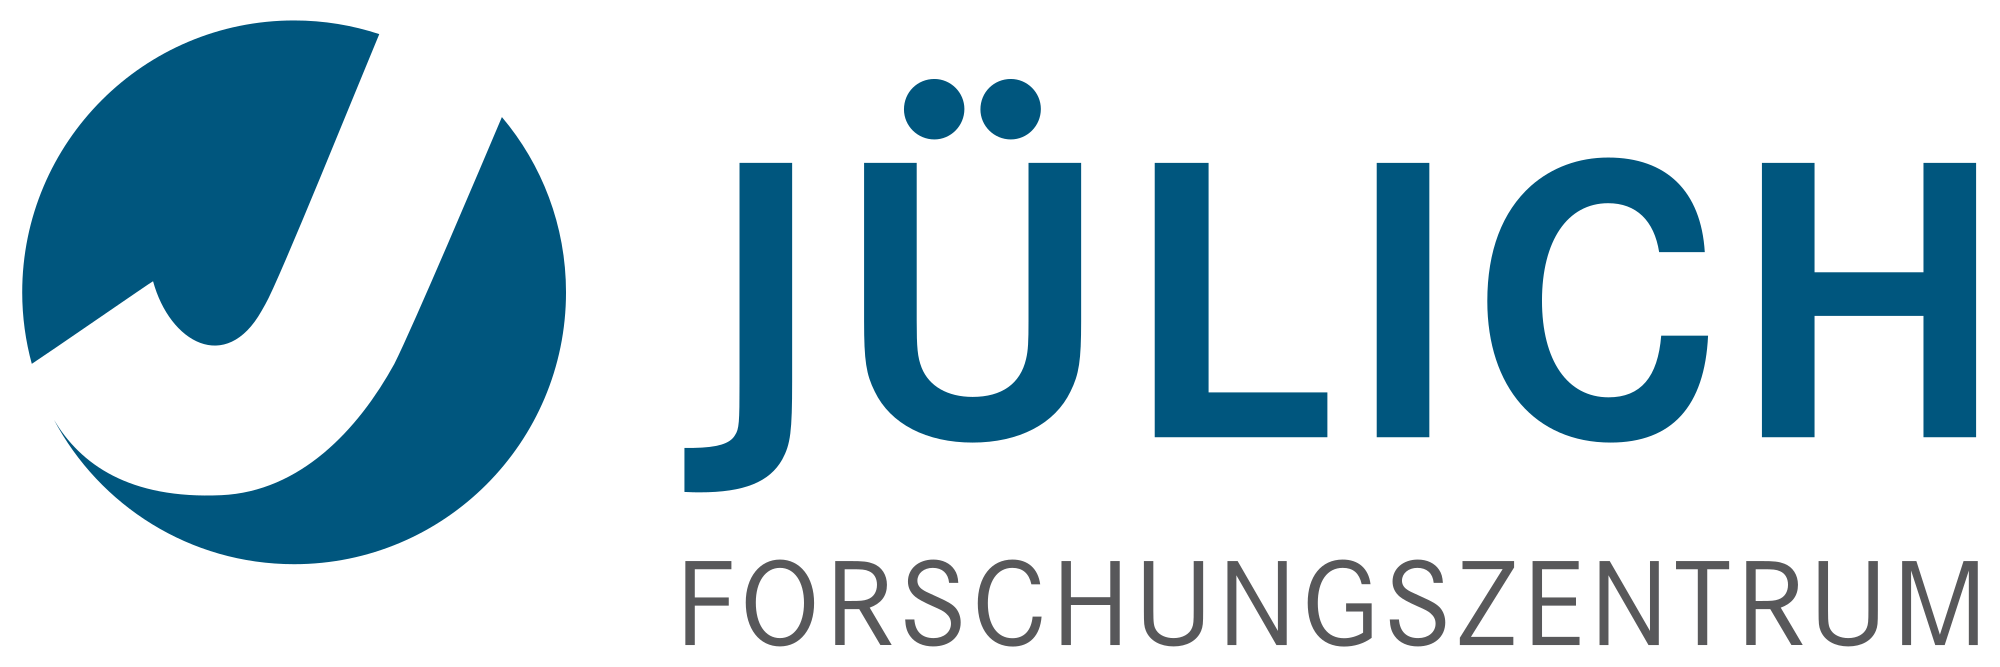 FZJ logo